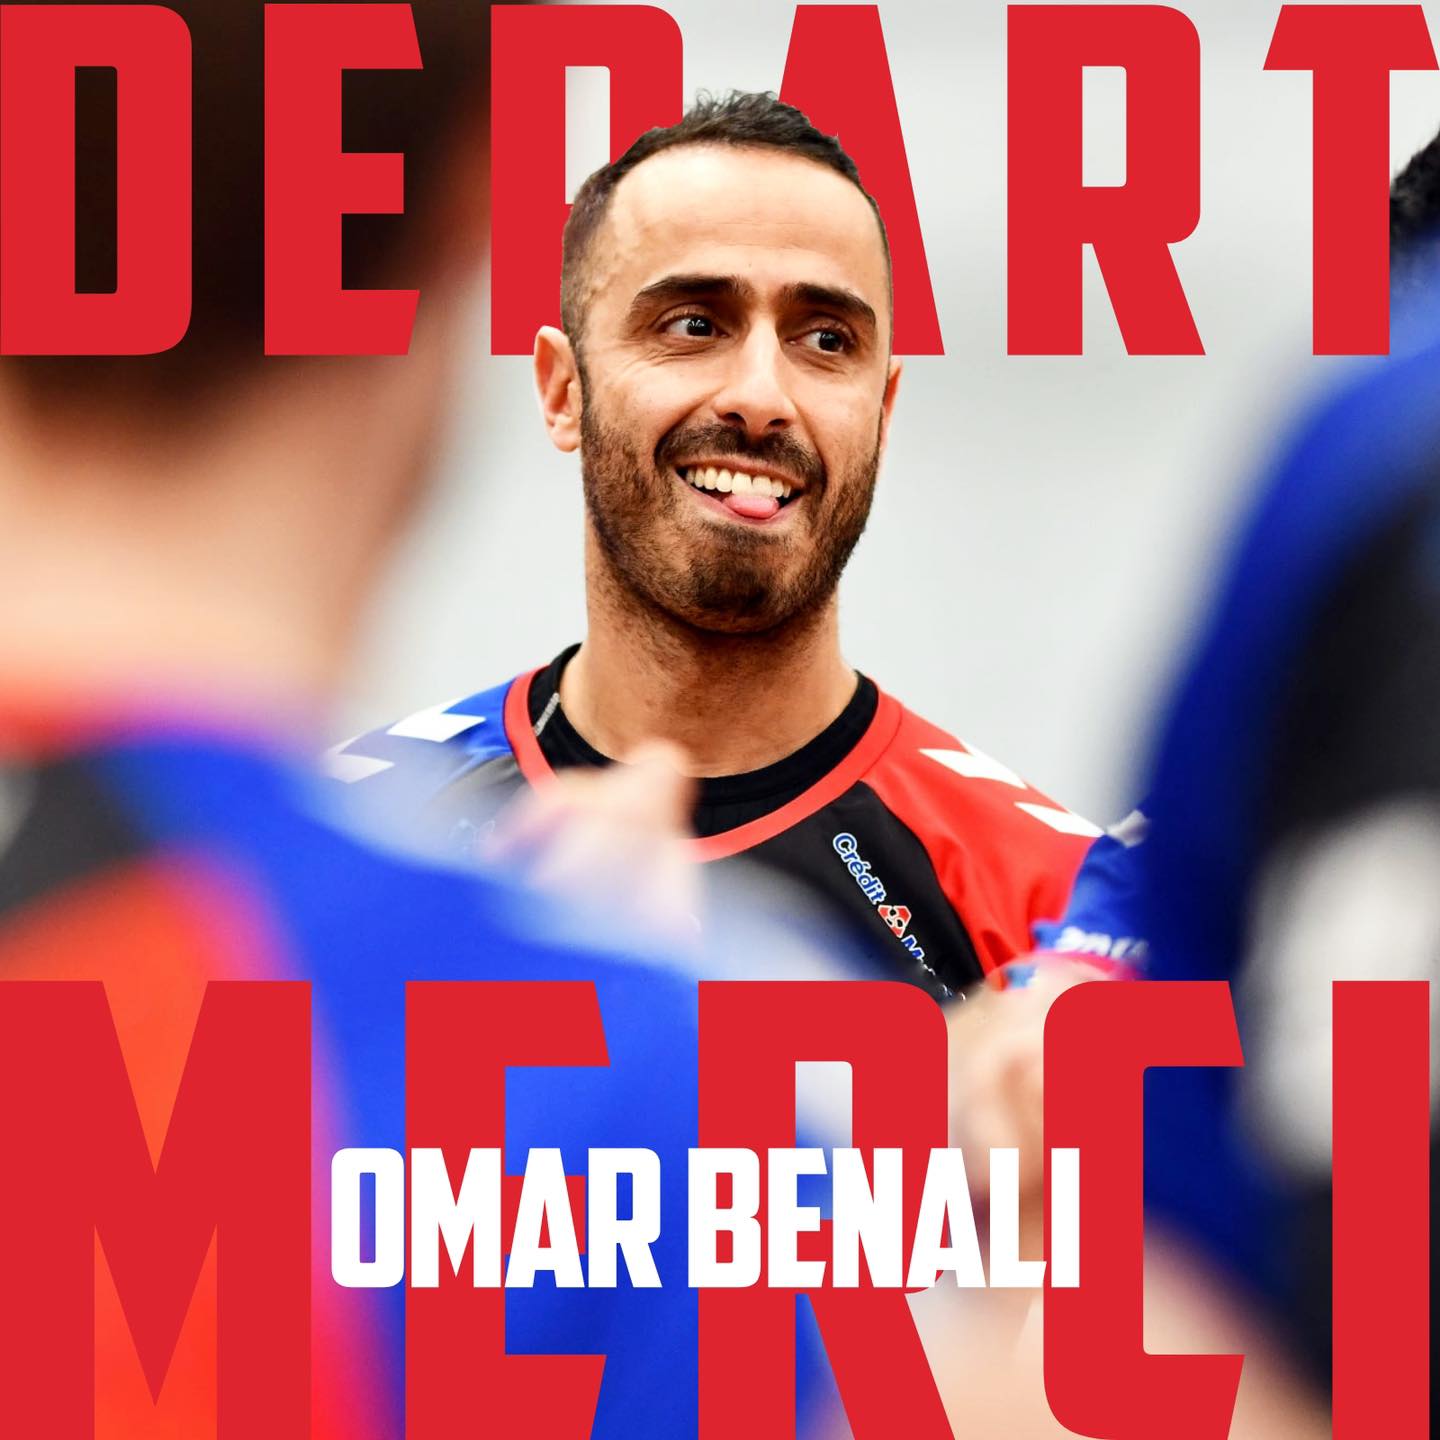 Omar Benali